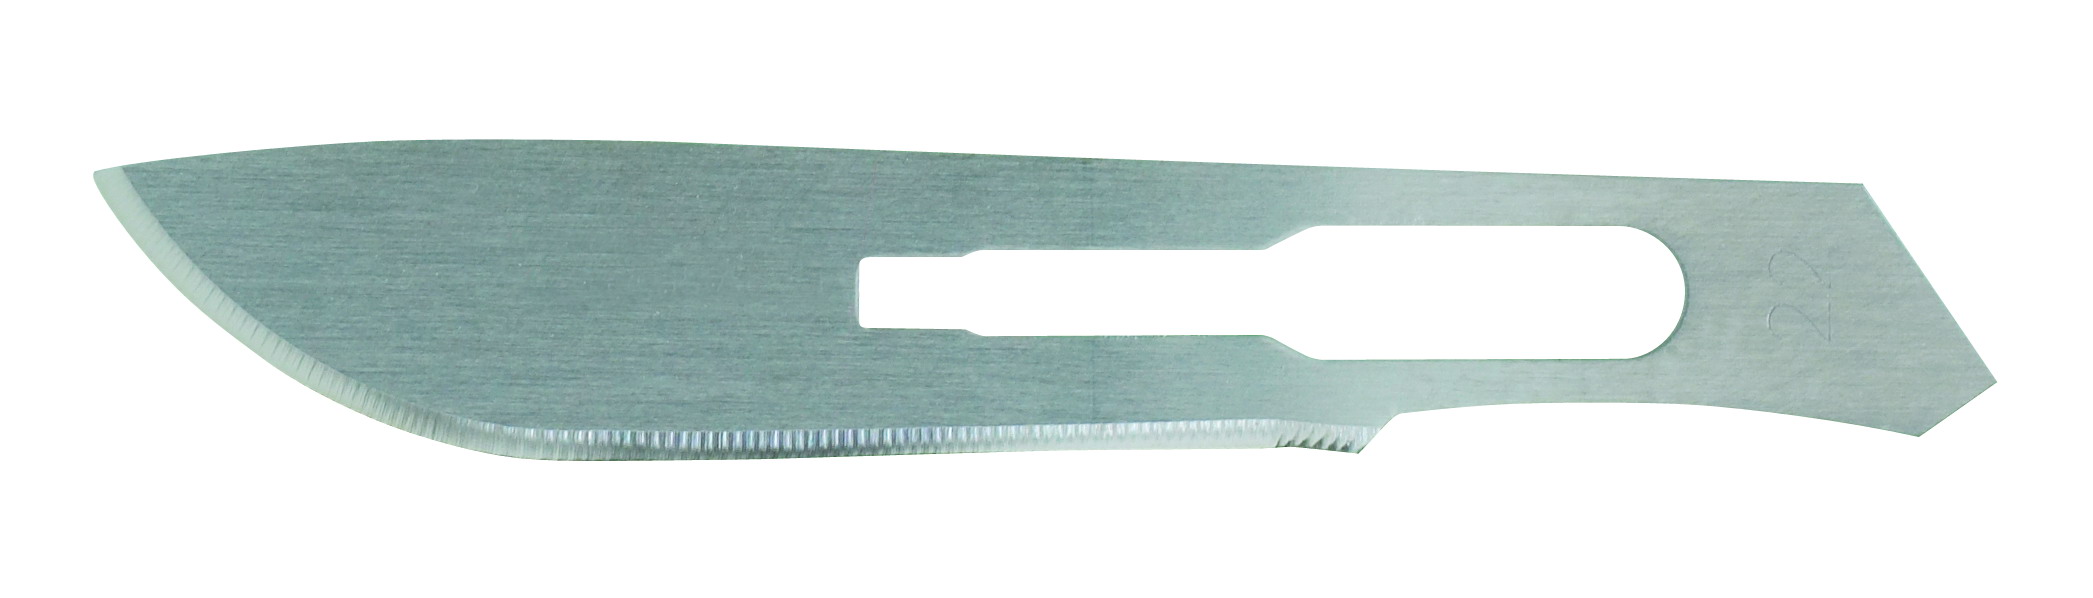 carbon-steel-sterile-surgical-blades-no-22-4-122-miltex.jpg